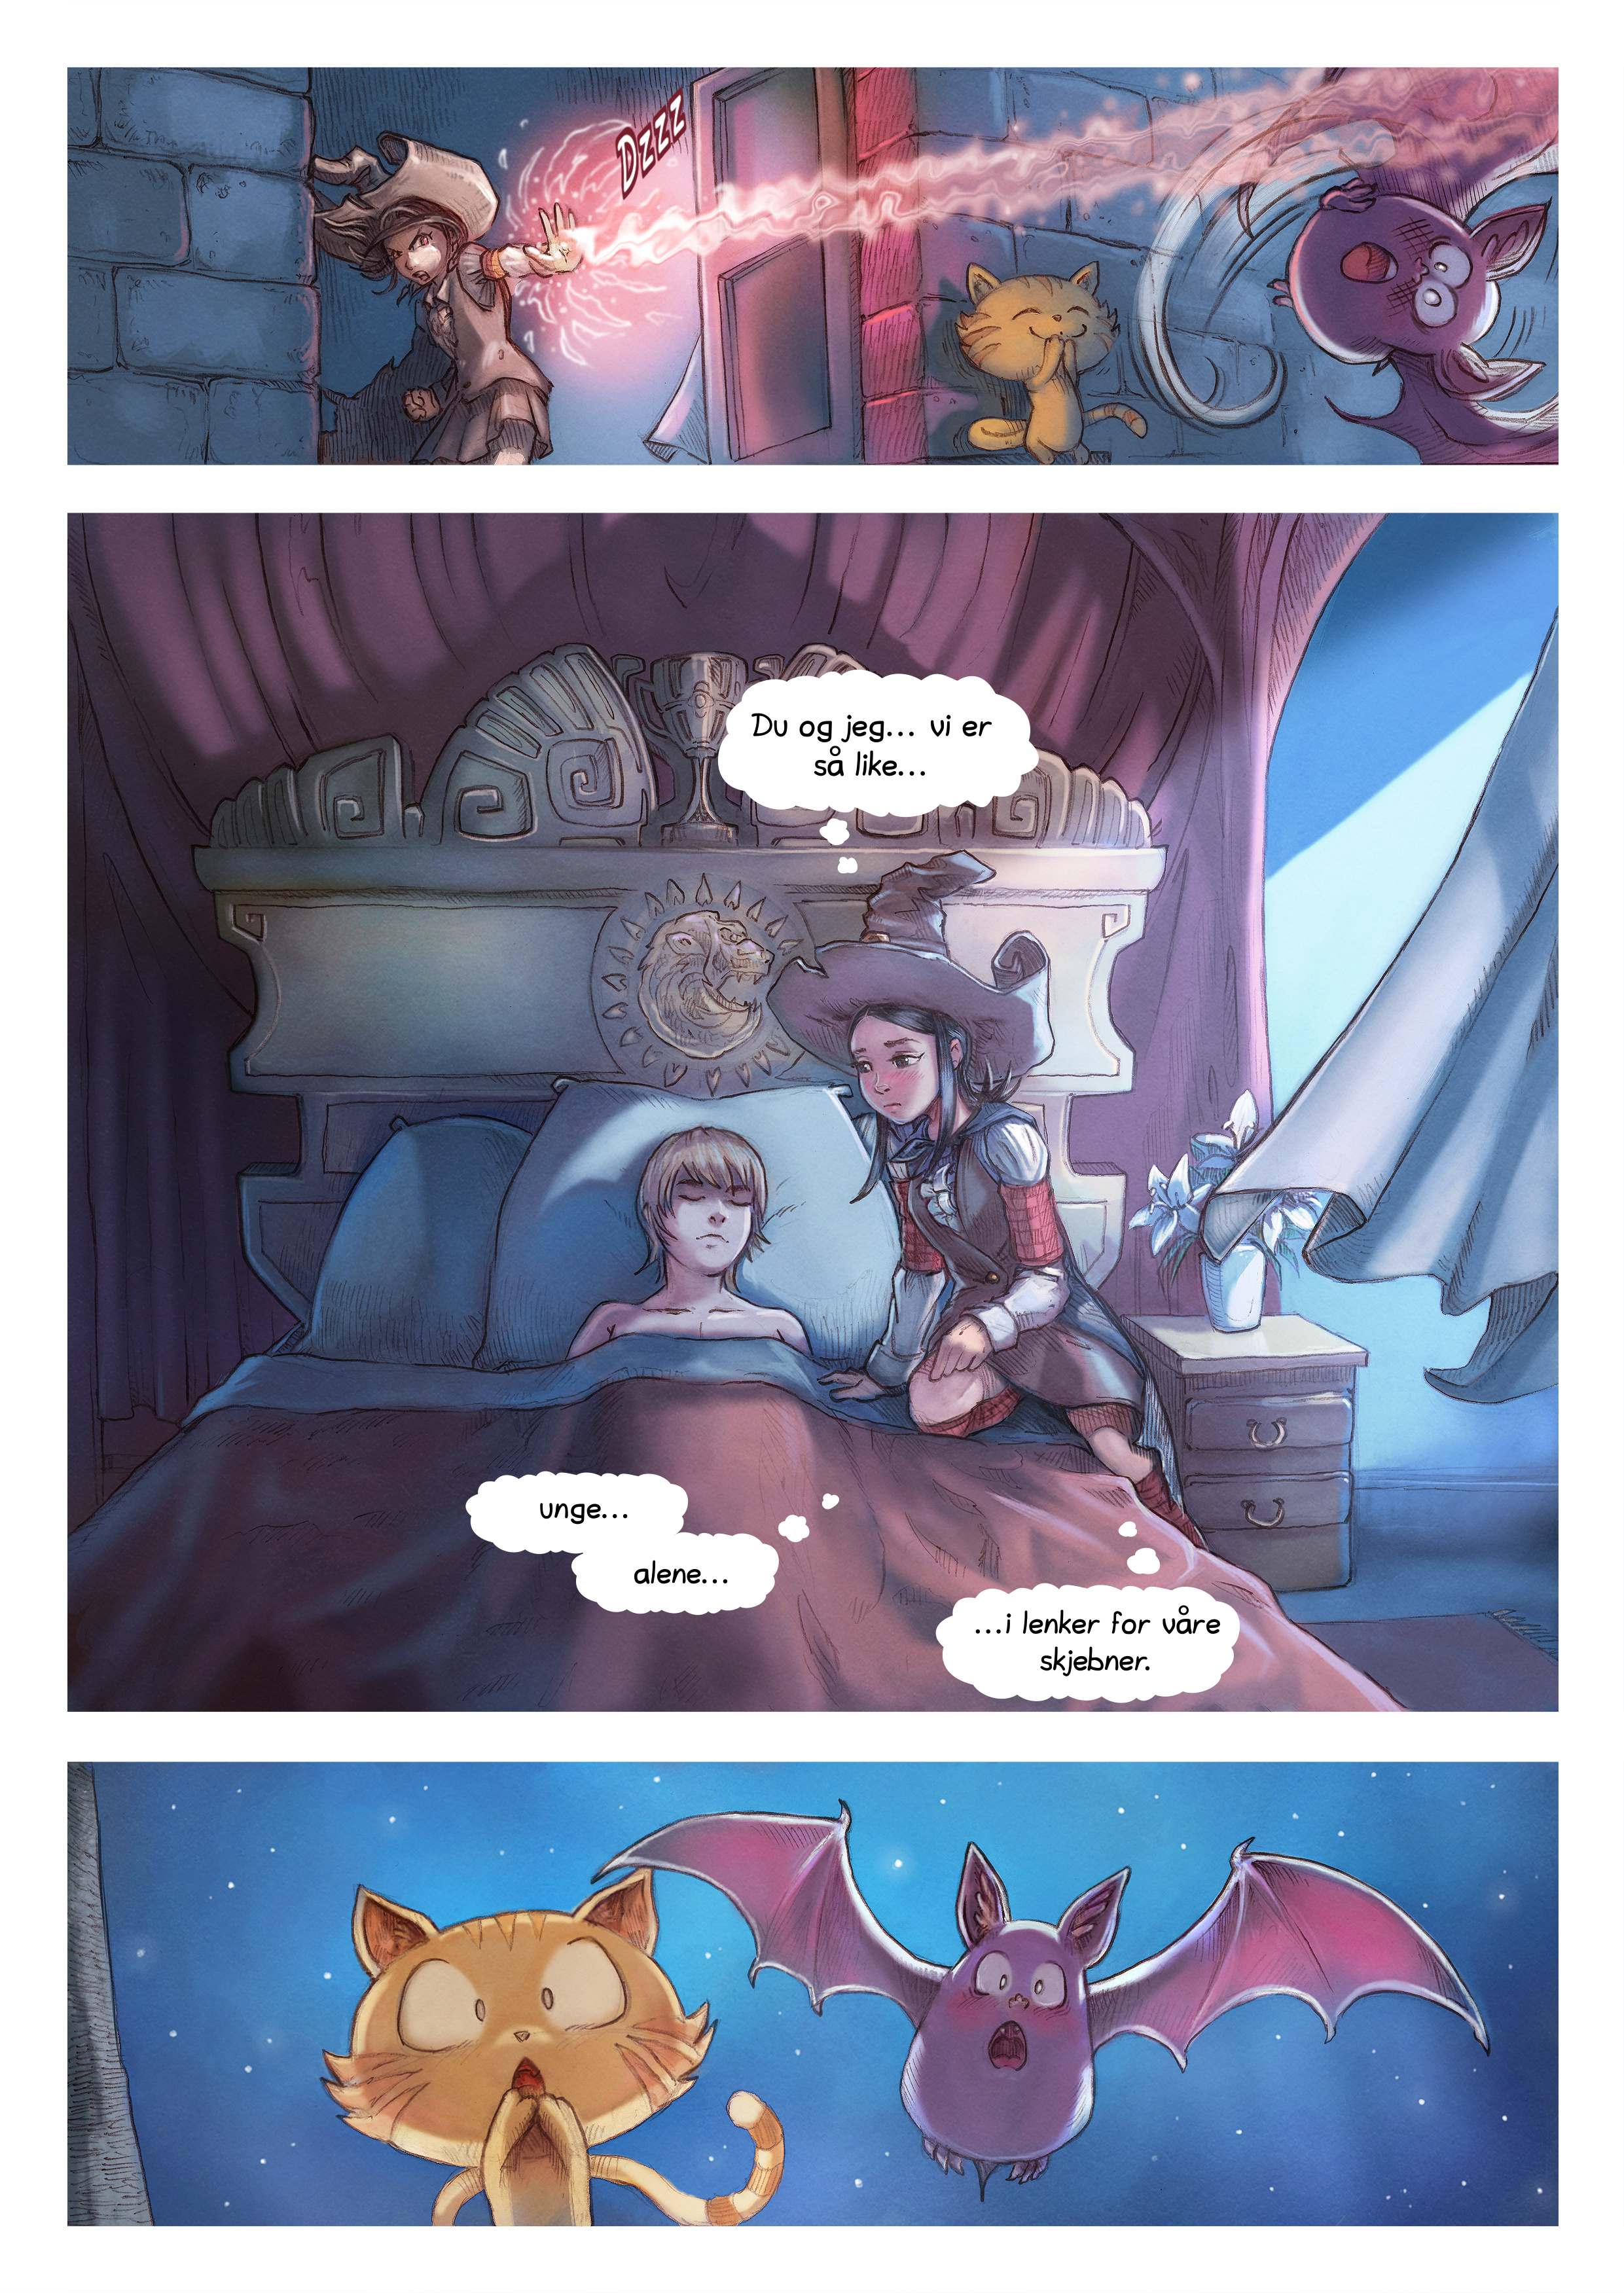 Episode 11: Kaosias hekser, Page 5